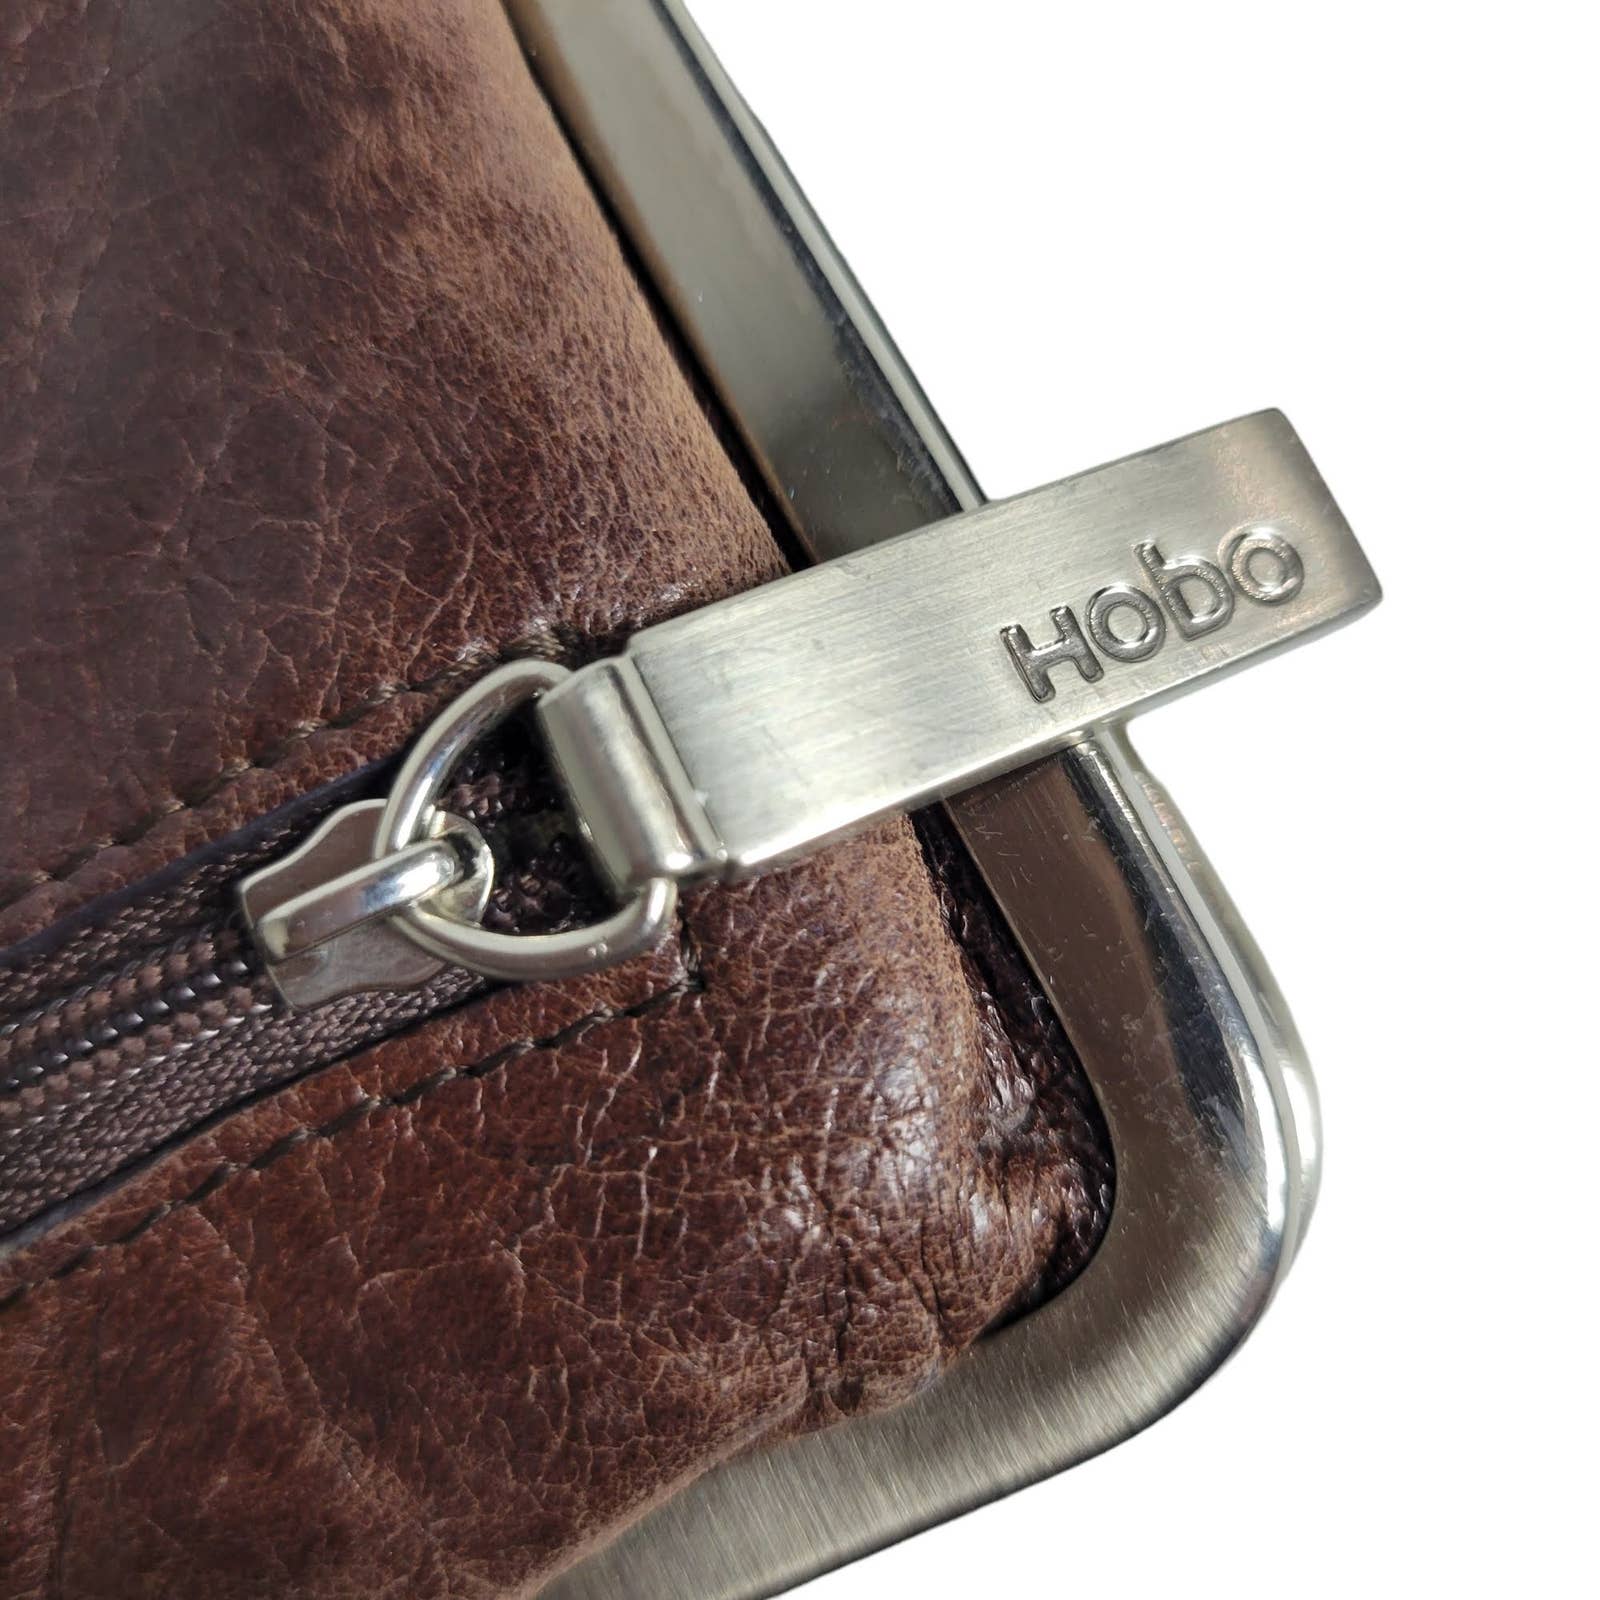 Hobo Clutch Wallet Lauren Double Frame Dark Distressed Brown Leather Pockets Kiss Lock